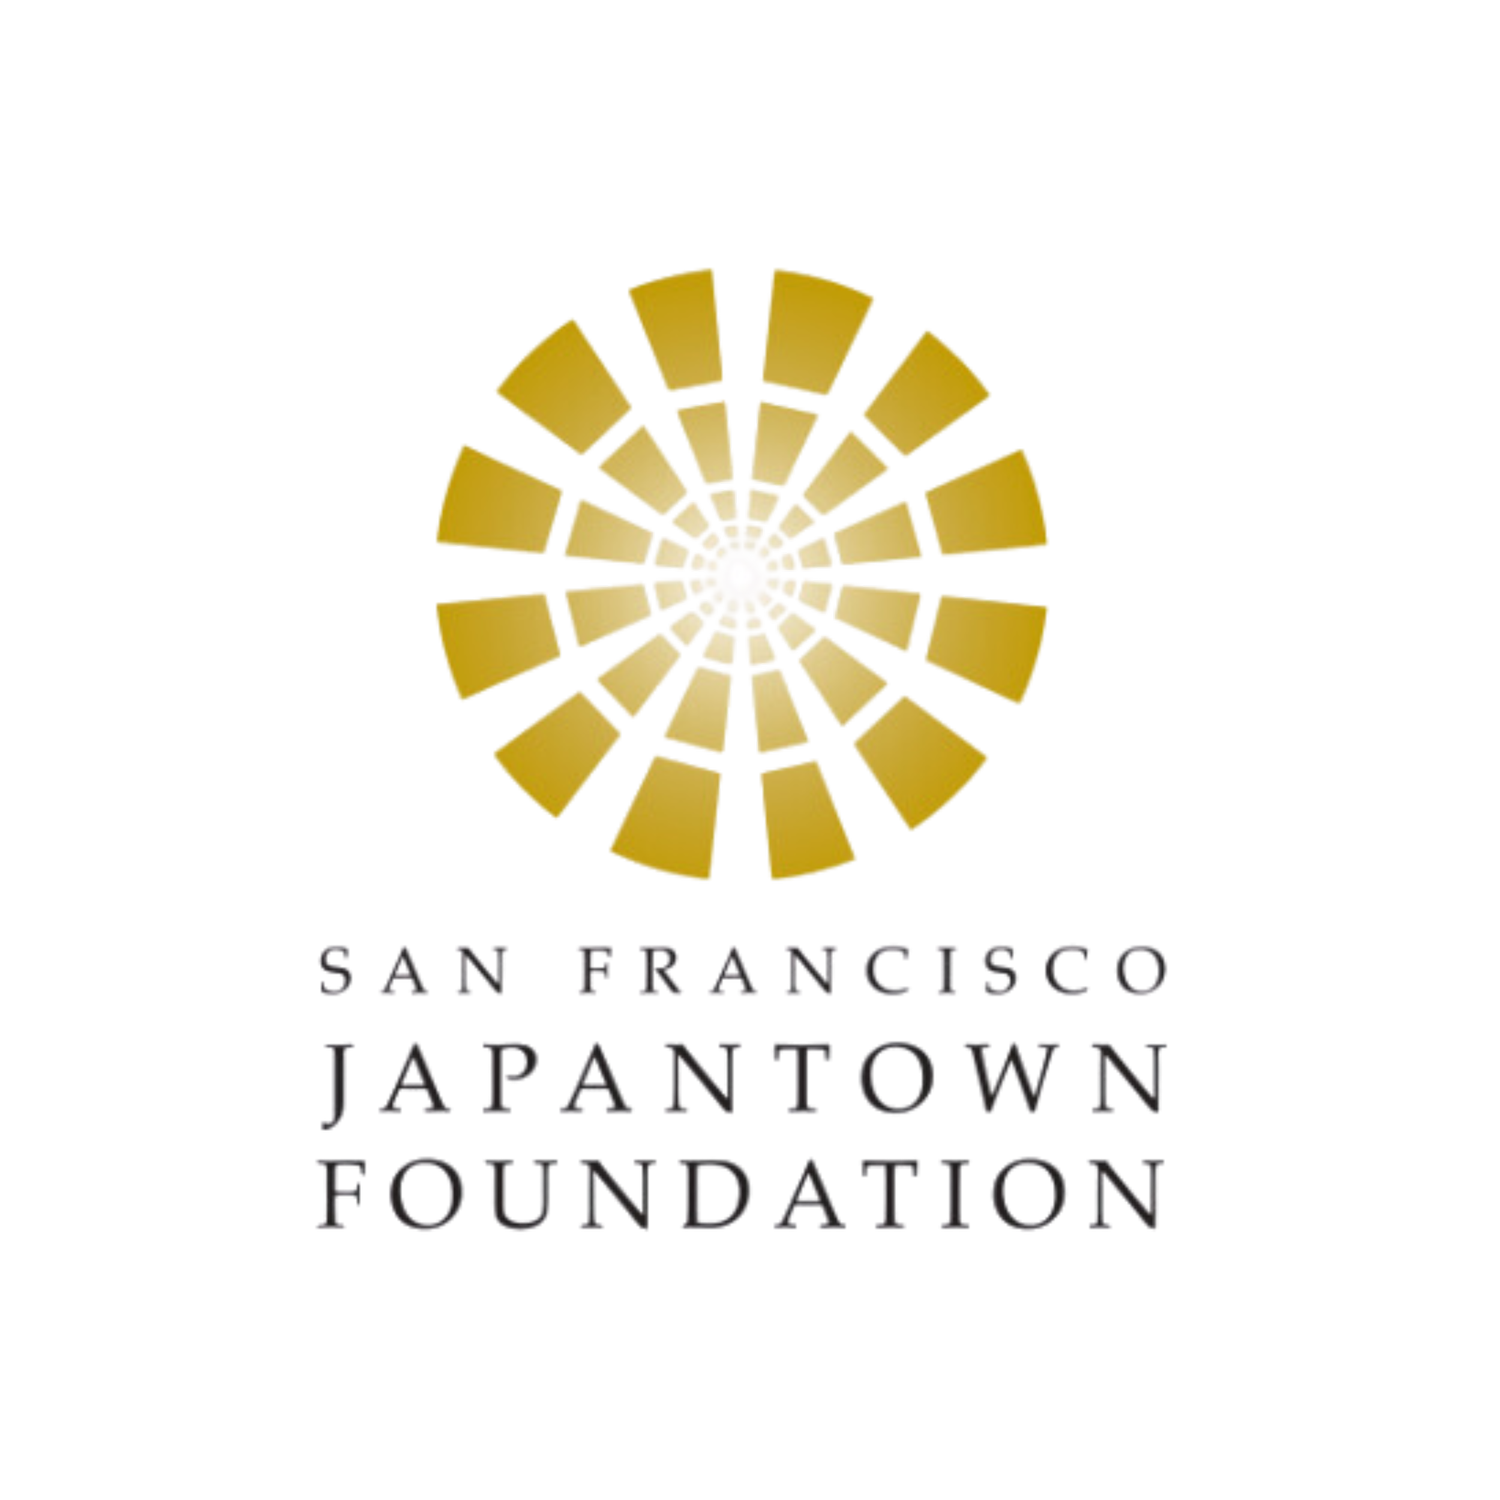 San Francisco Japantown Foundation